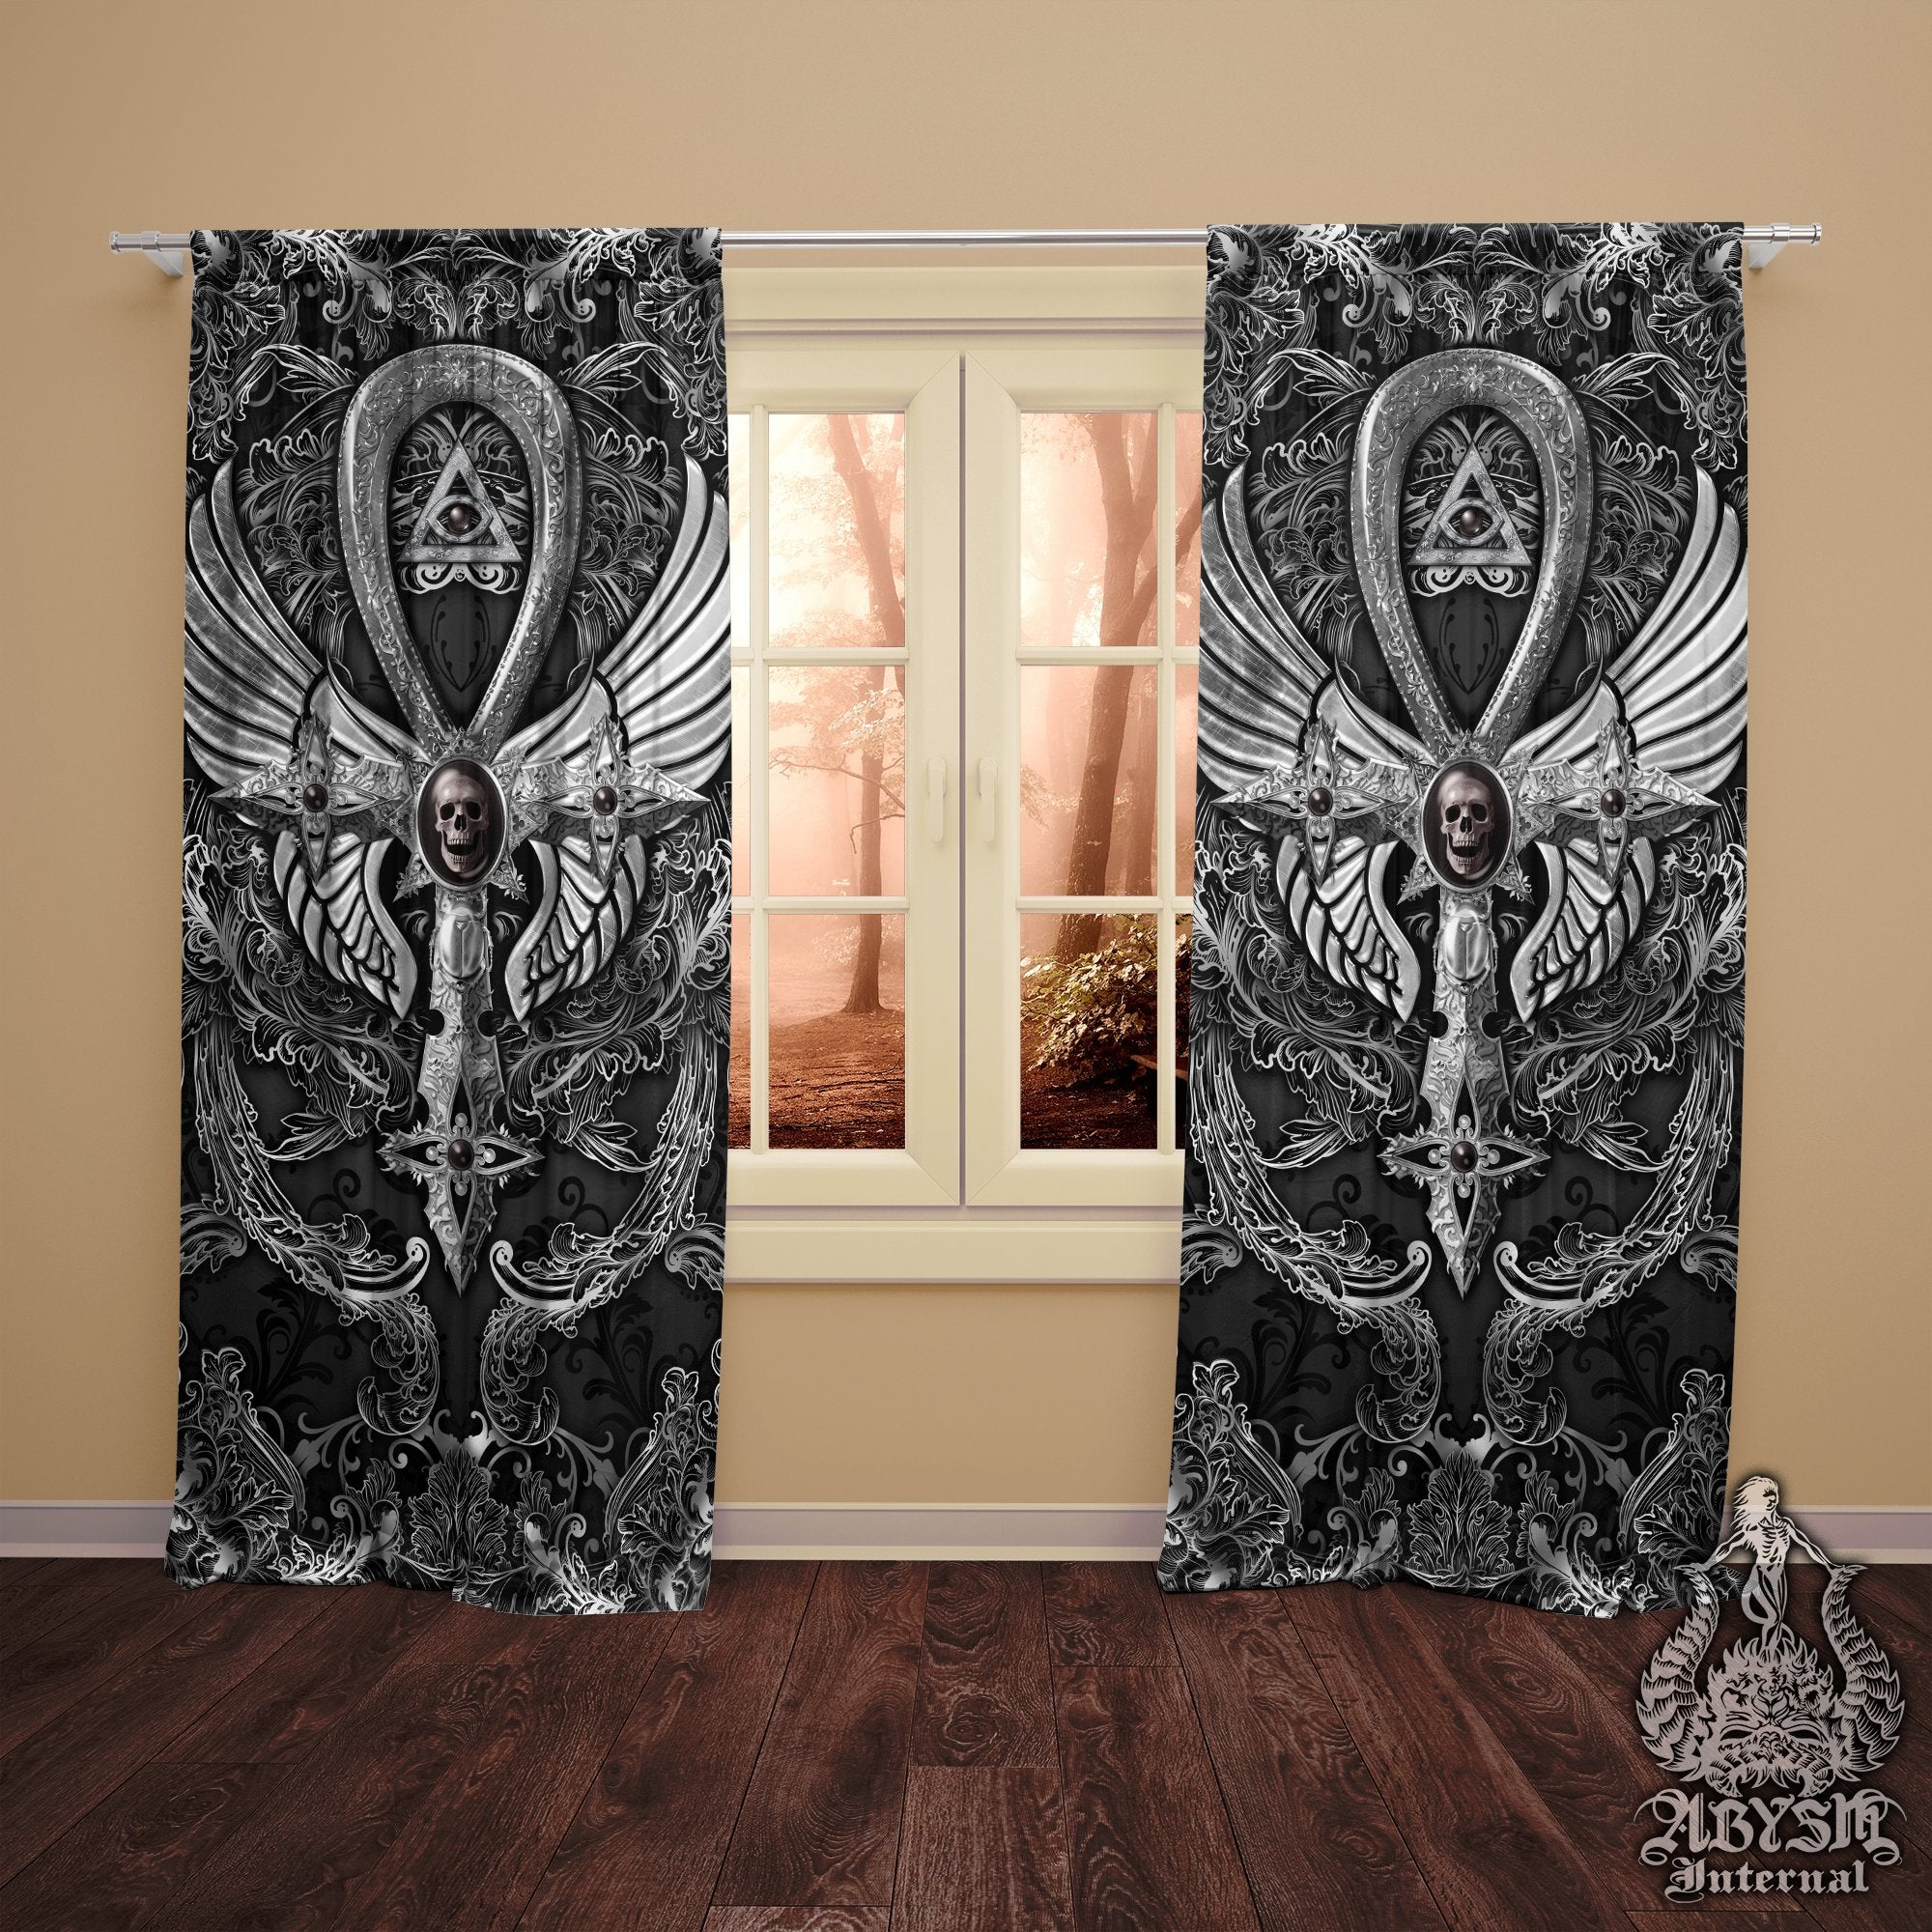 Gothic Ankh Curtains, 50x84' Printed Window Panels, Goth Home Decor, Black, Dark Cross Art Print - Red, Gold, White, 3 Colors - Abysm Internal